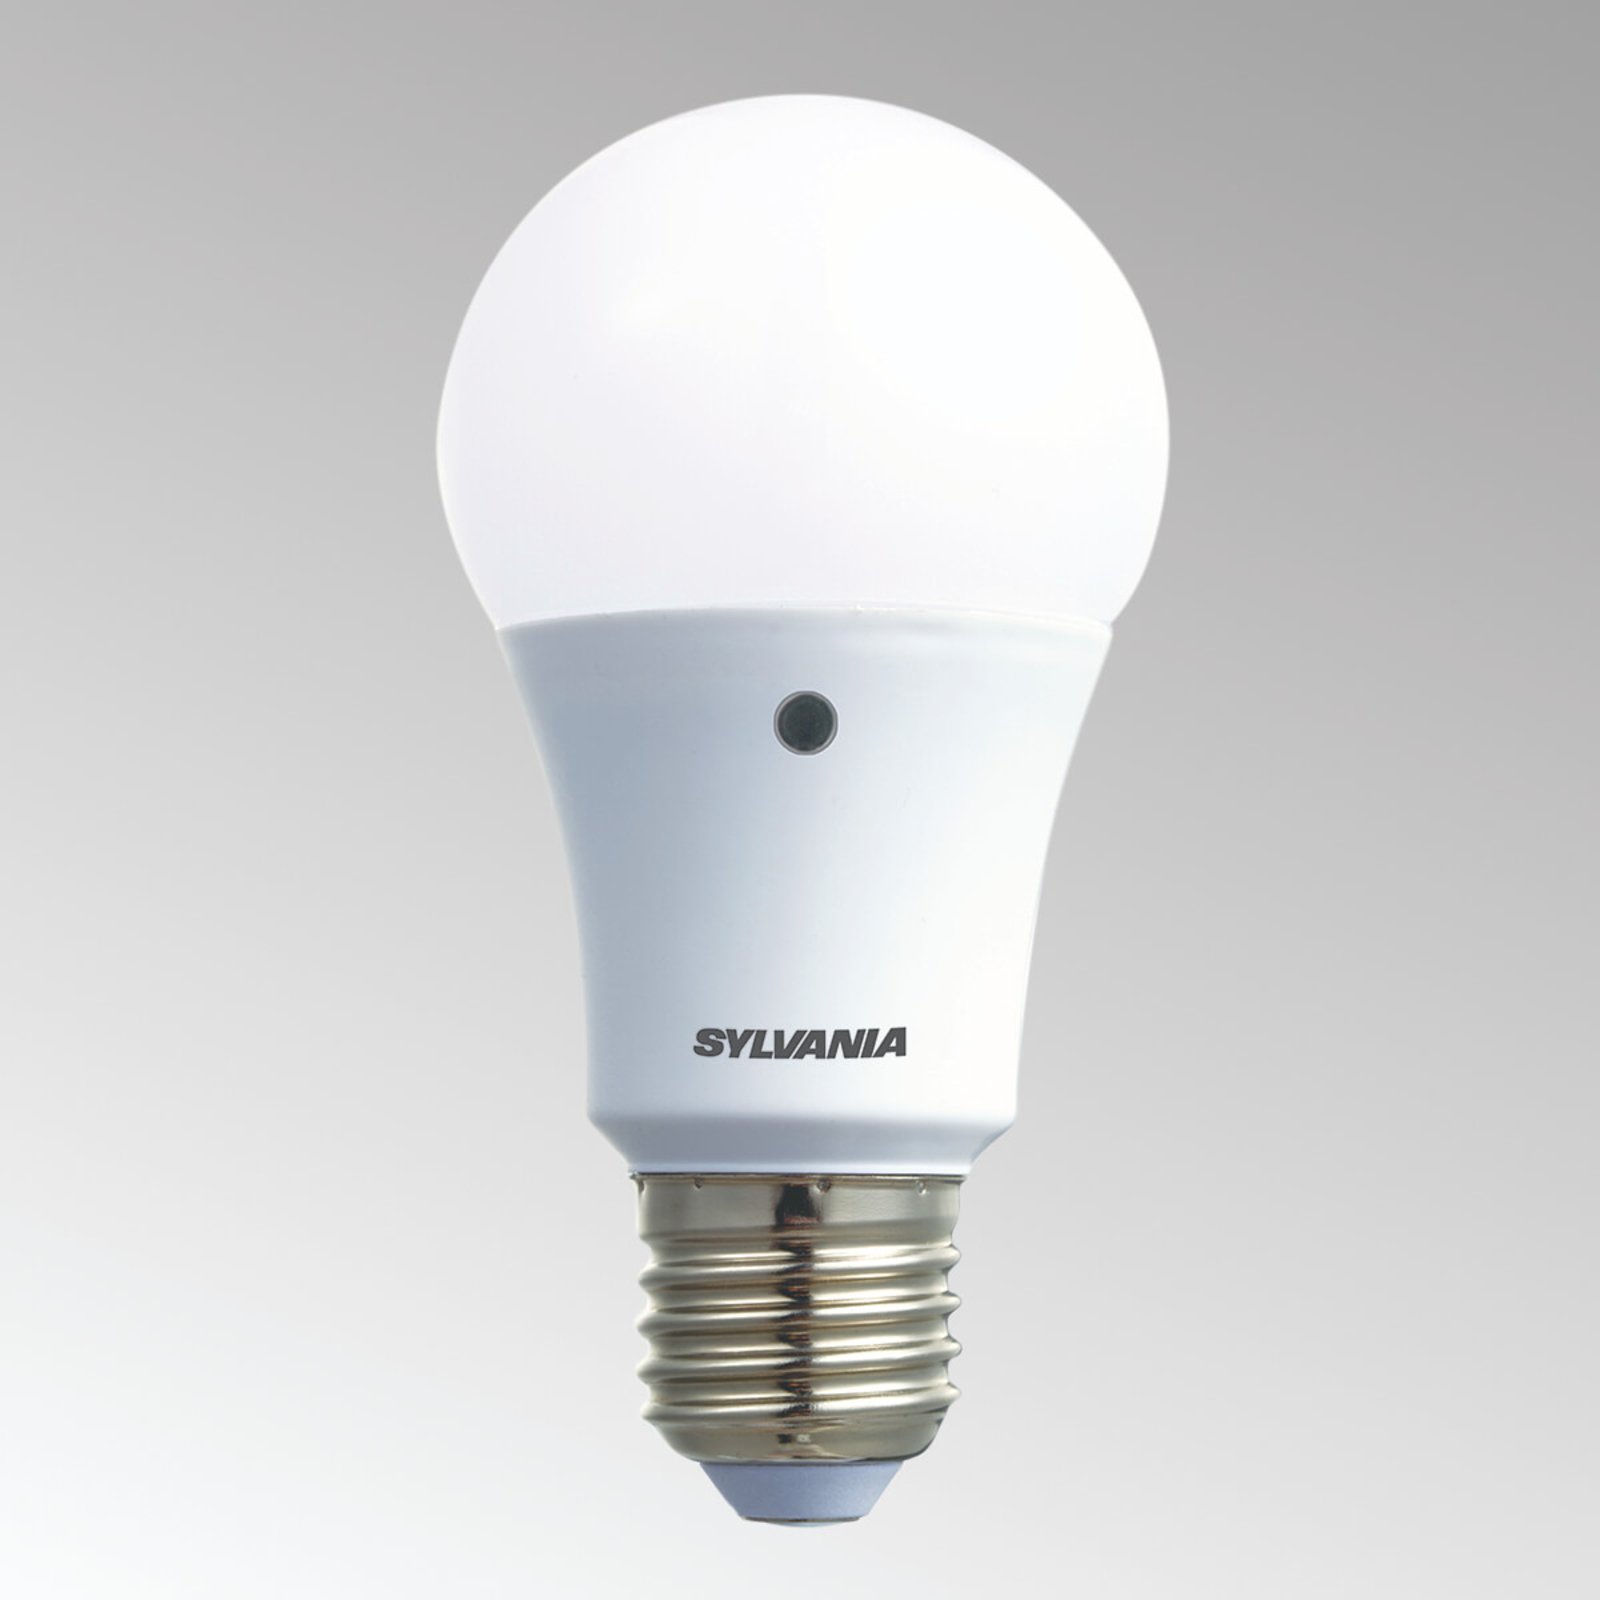 LED bulb TwinTone E27 8 W, 806 lumens